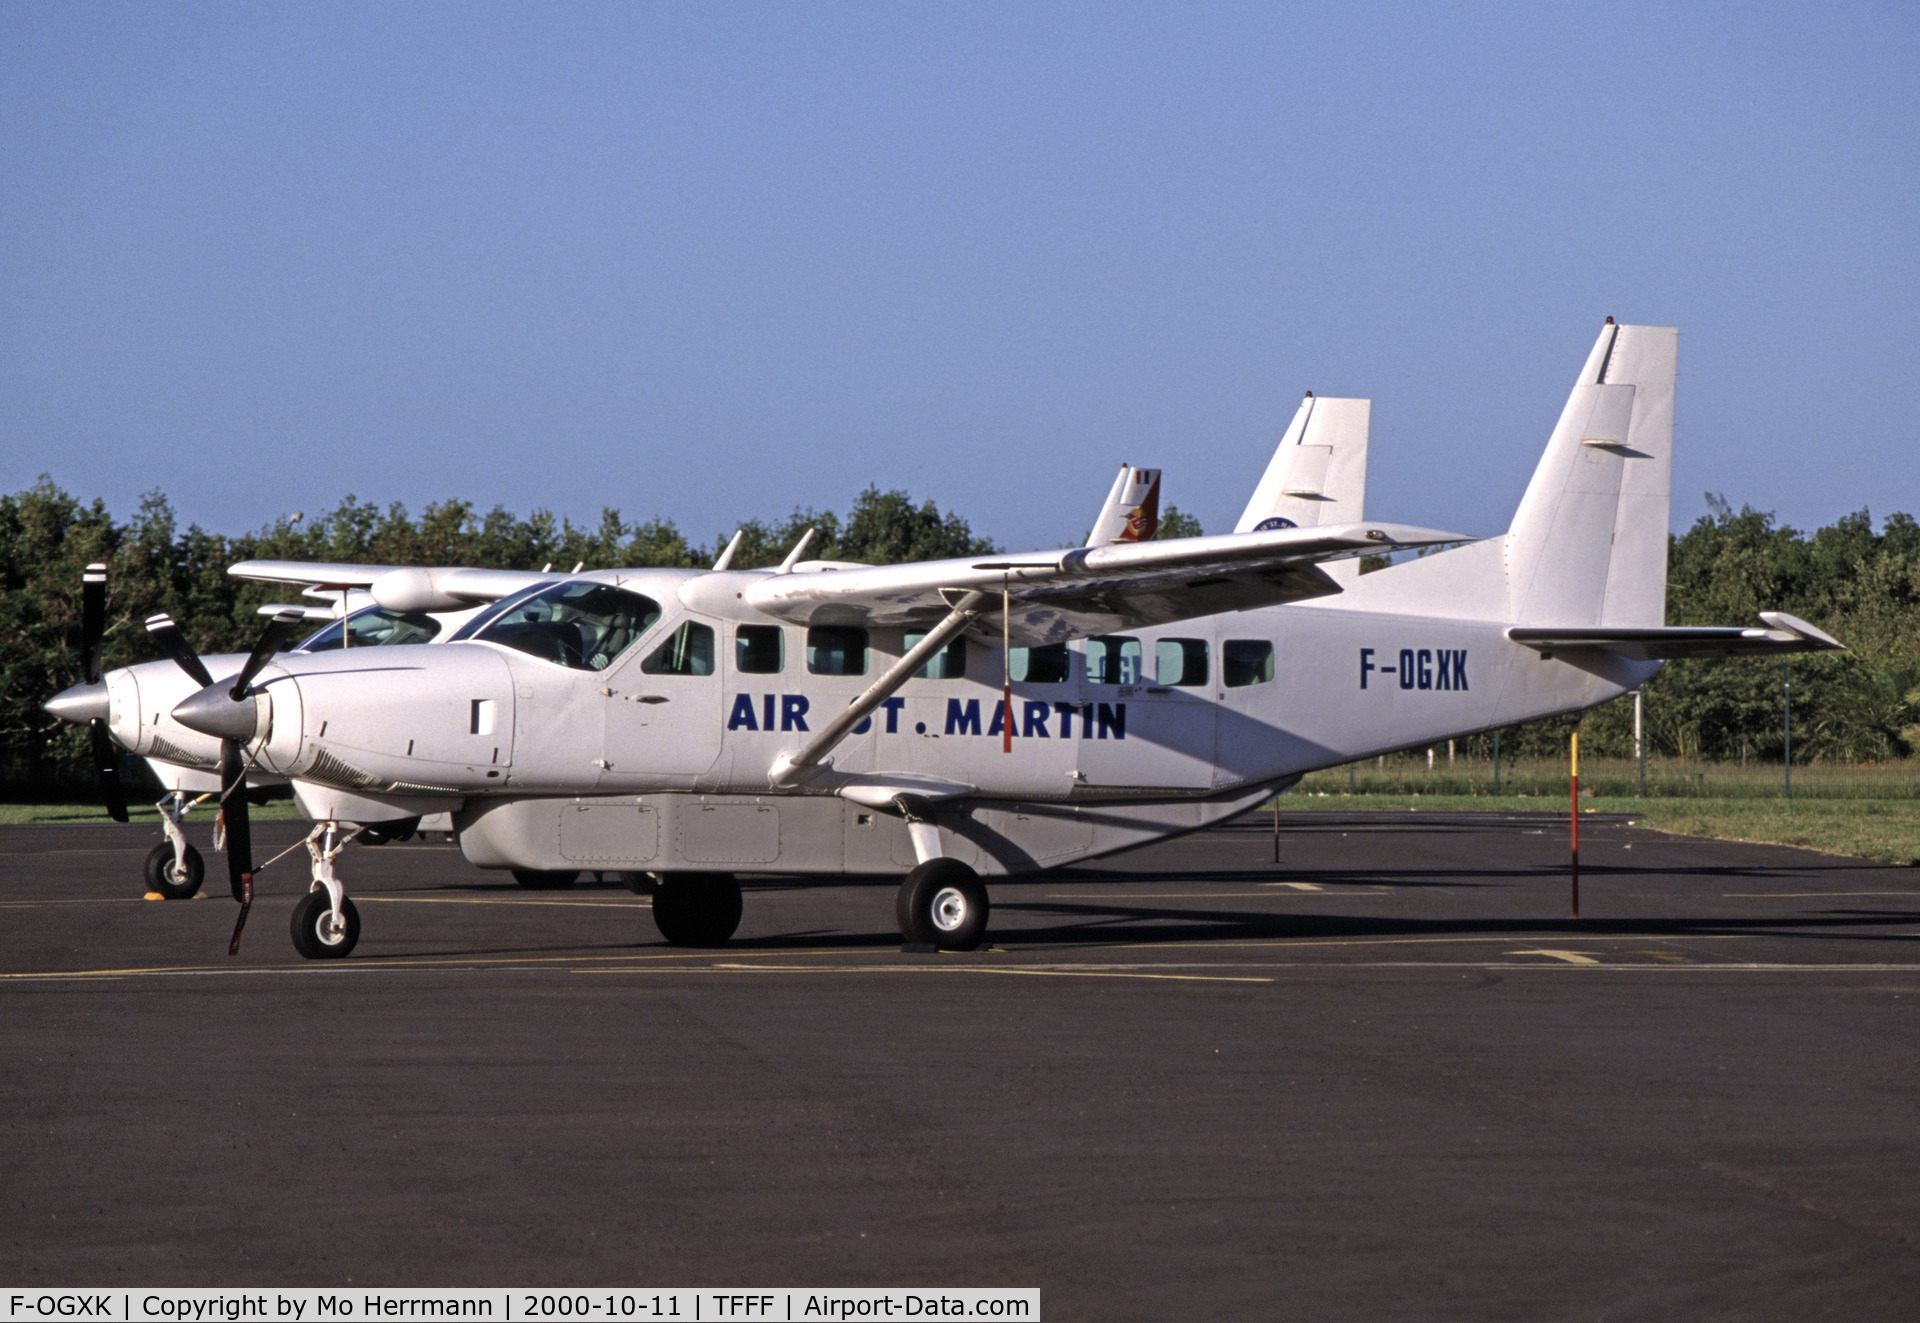 F-OGXK, 1995 Cessna 208B Grand Caravan C/N 208B-0459, taken at Fort de France, back in 2000.